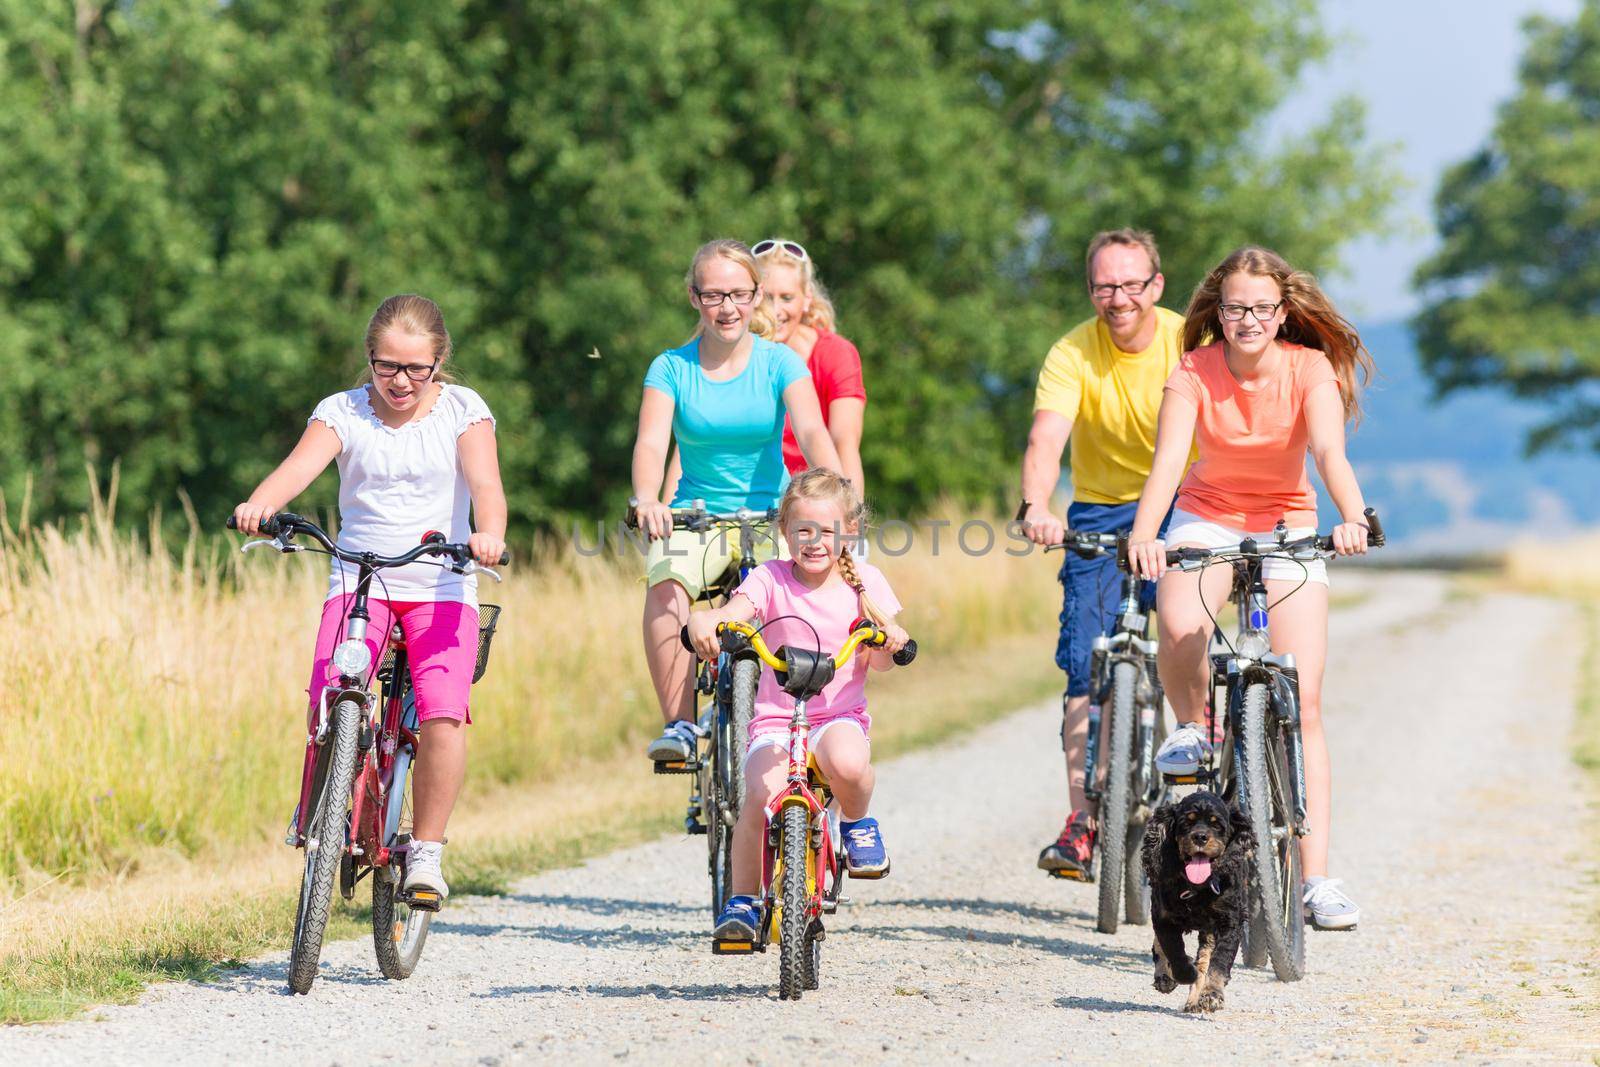 Family on bikes at dirt path by Kzenon